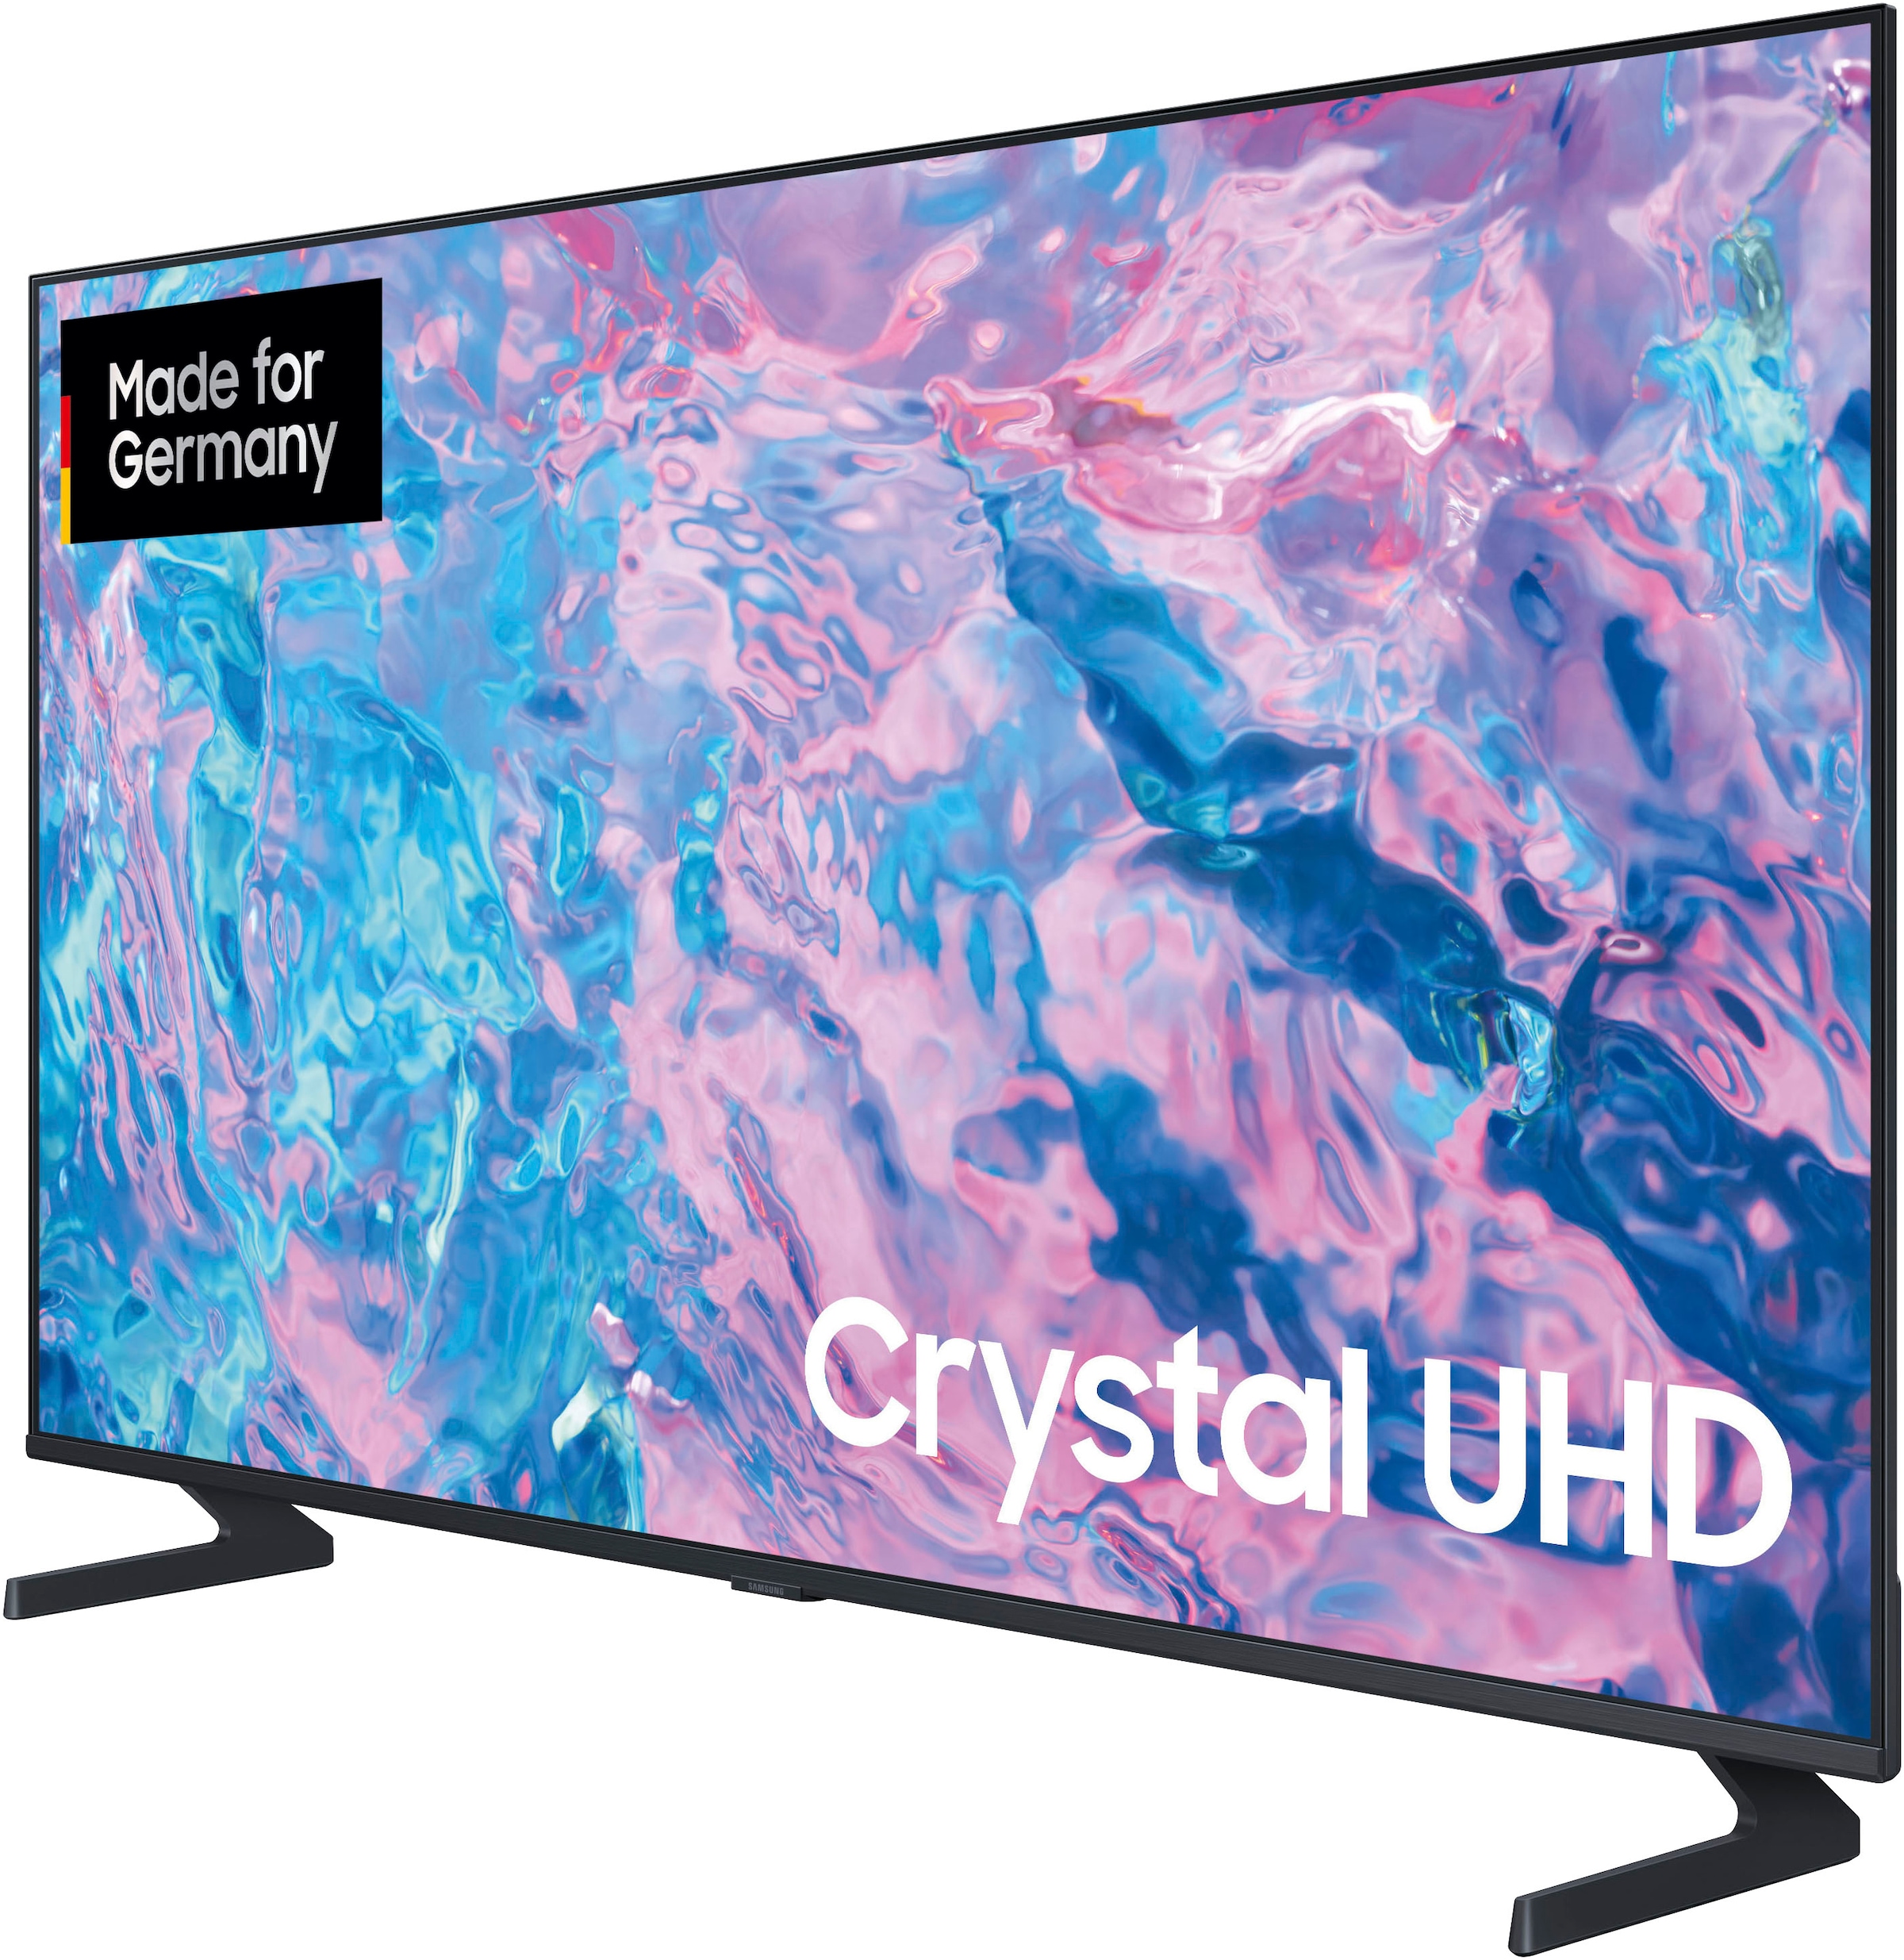 Samsung LED-Fernseher »GU43CU6979U«, 108 cm/43 Zoll, 4K Ultra HD, Smart-TV